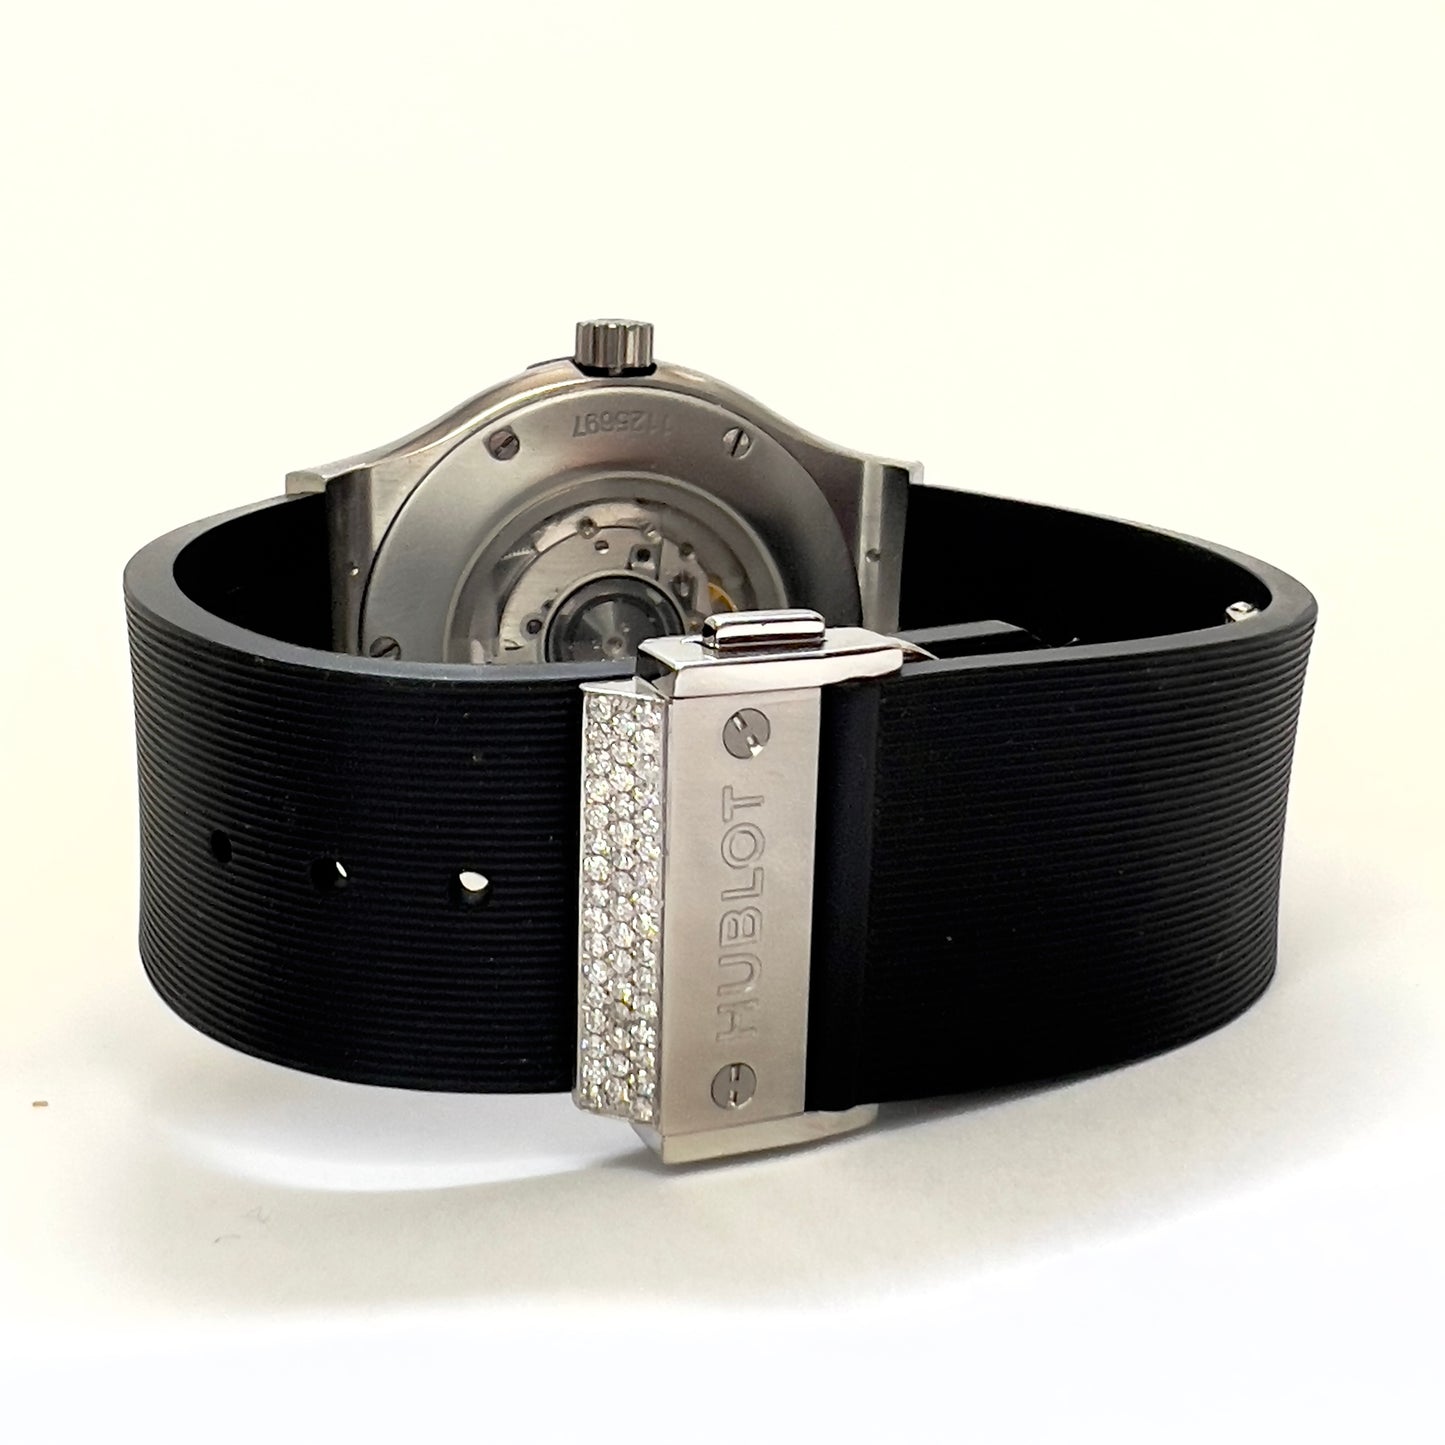 HUBLOT CLASSIC FUSION 45mm Automatic Titanium 3.36TCW Diamond Watch SKELETON Backcase